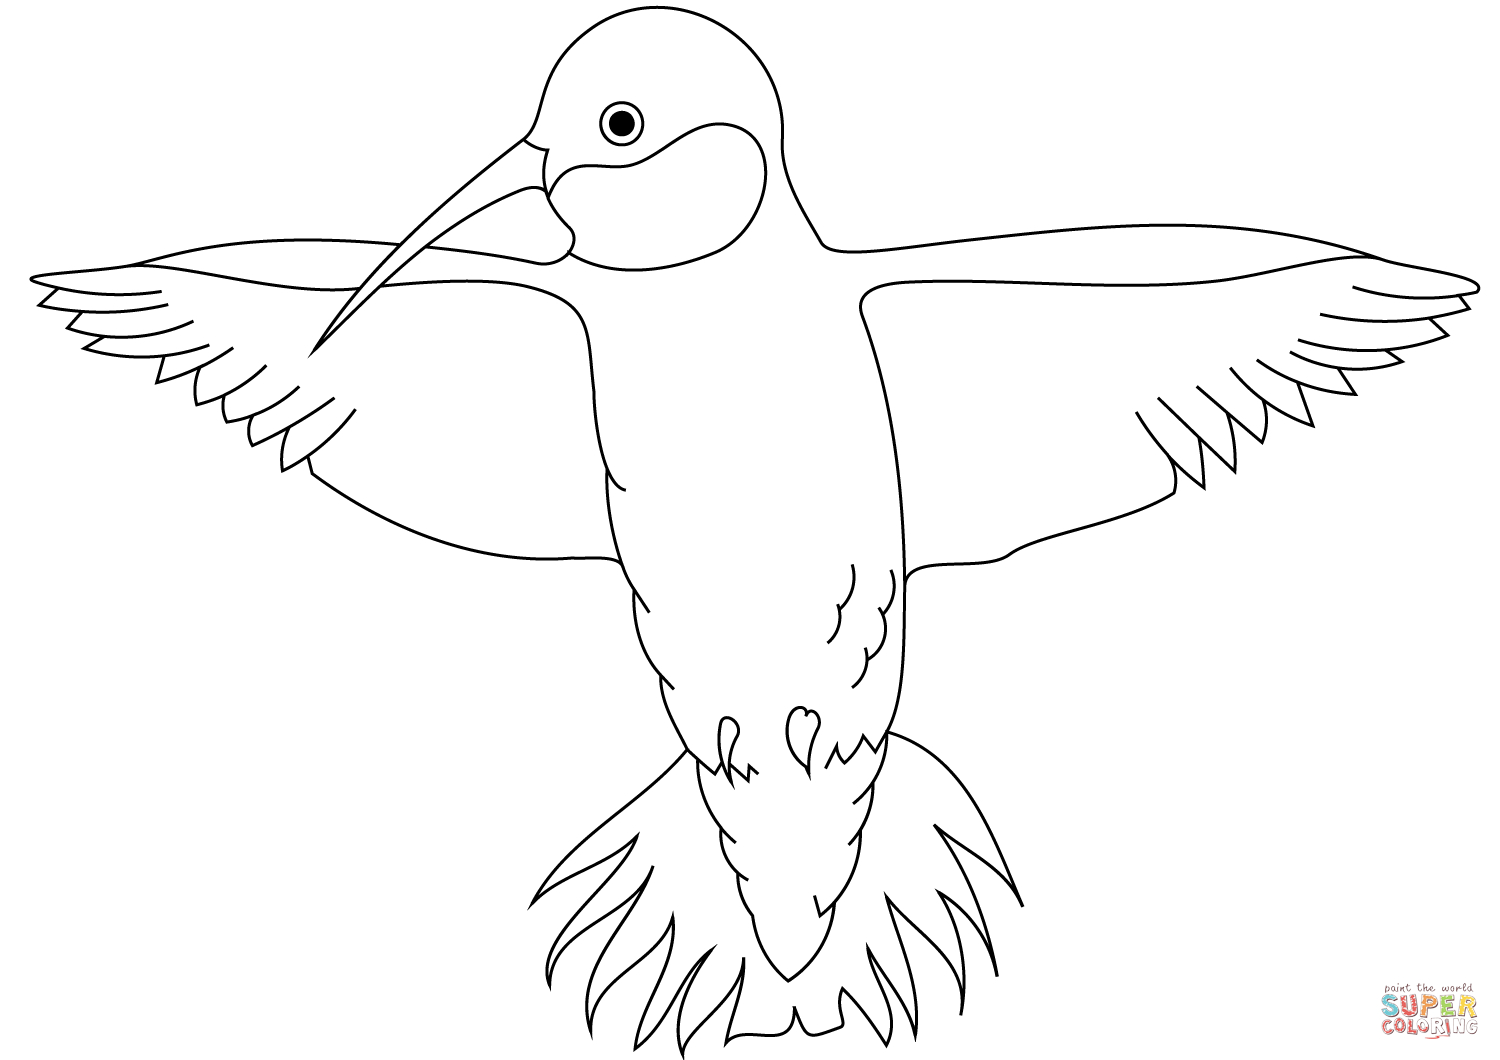 Hummingbird Coloring Page | Free Printable Coloring Pages - Free Printable Pictures Of Hummingbirds